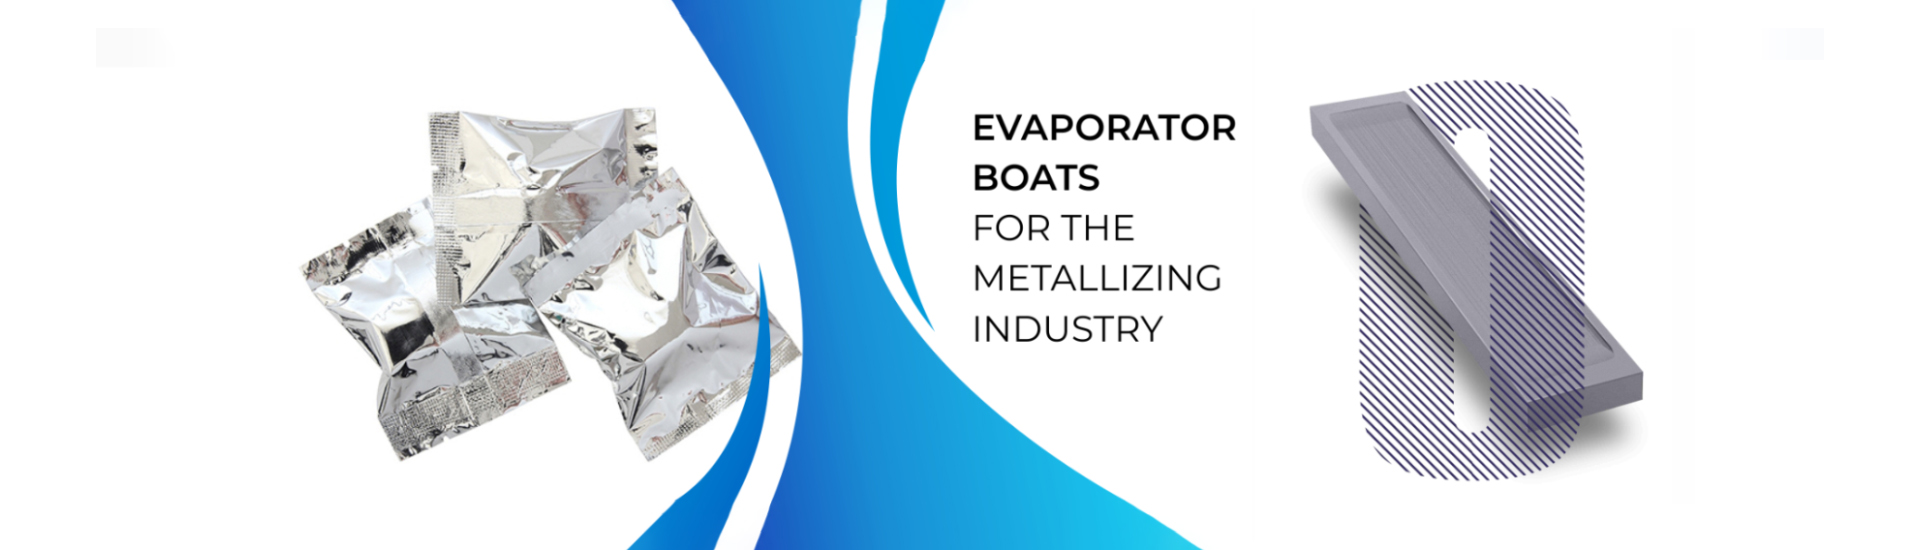 Evaporator Boats